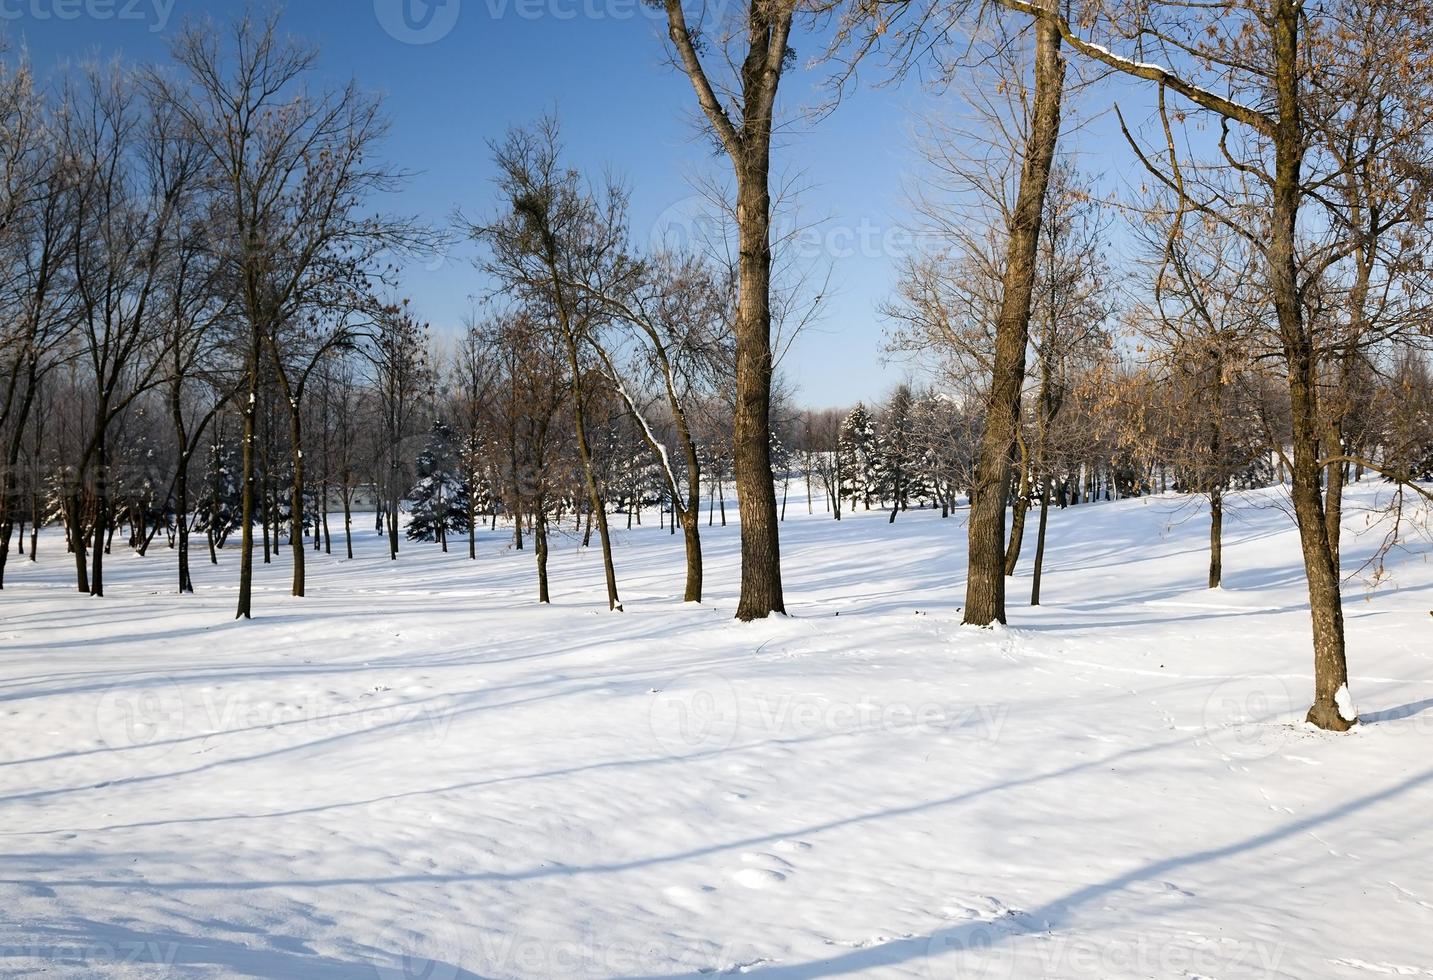 arbres en hiver photo